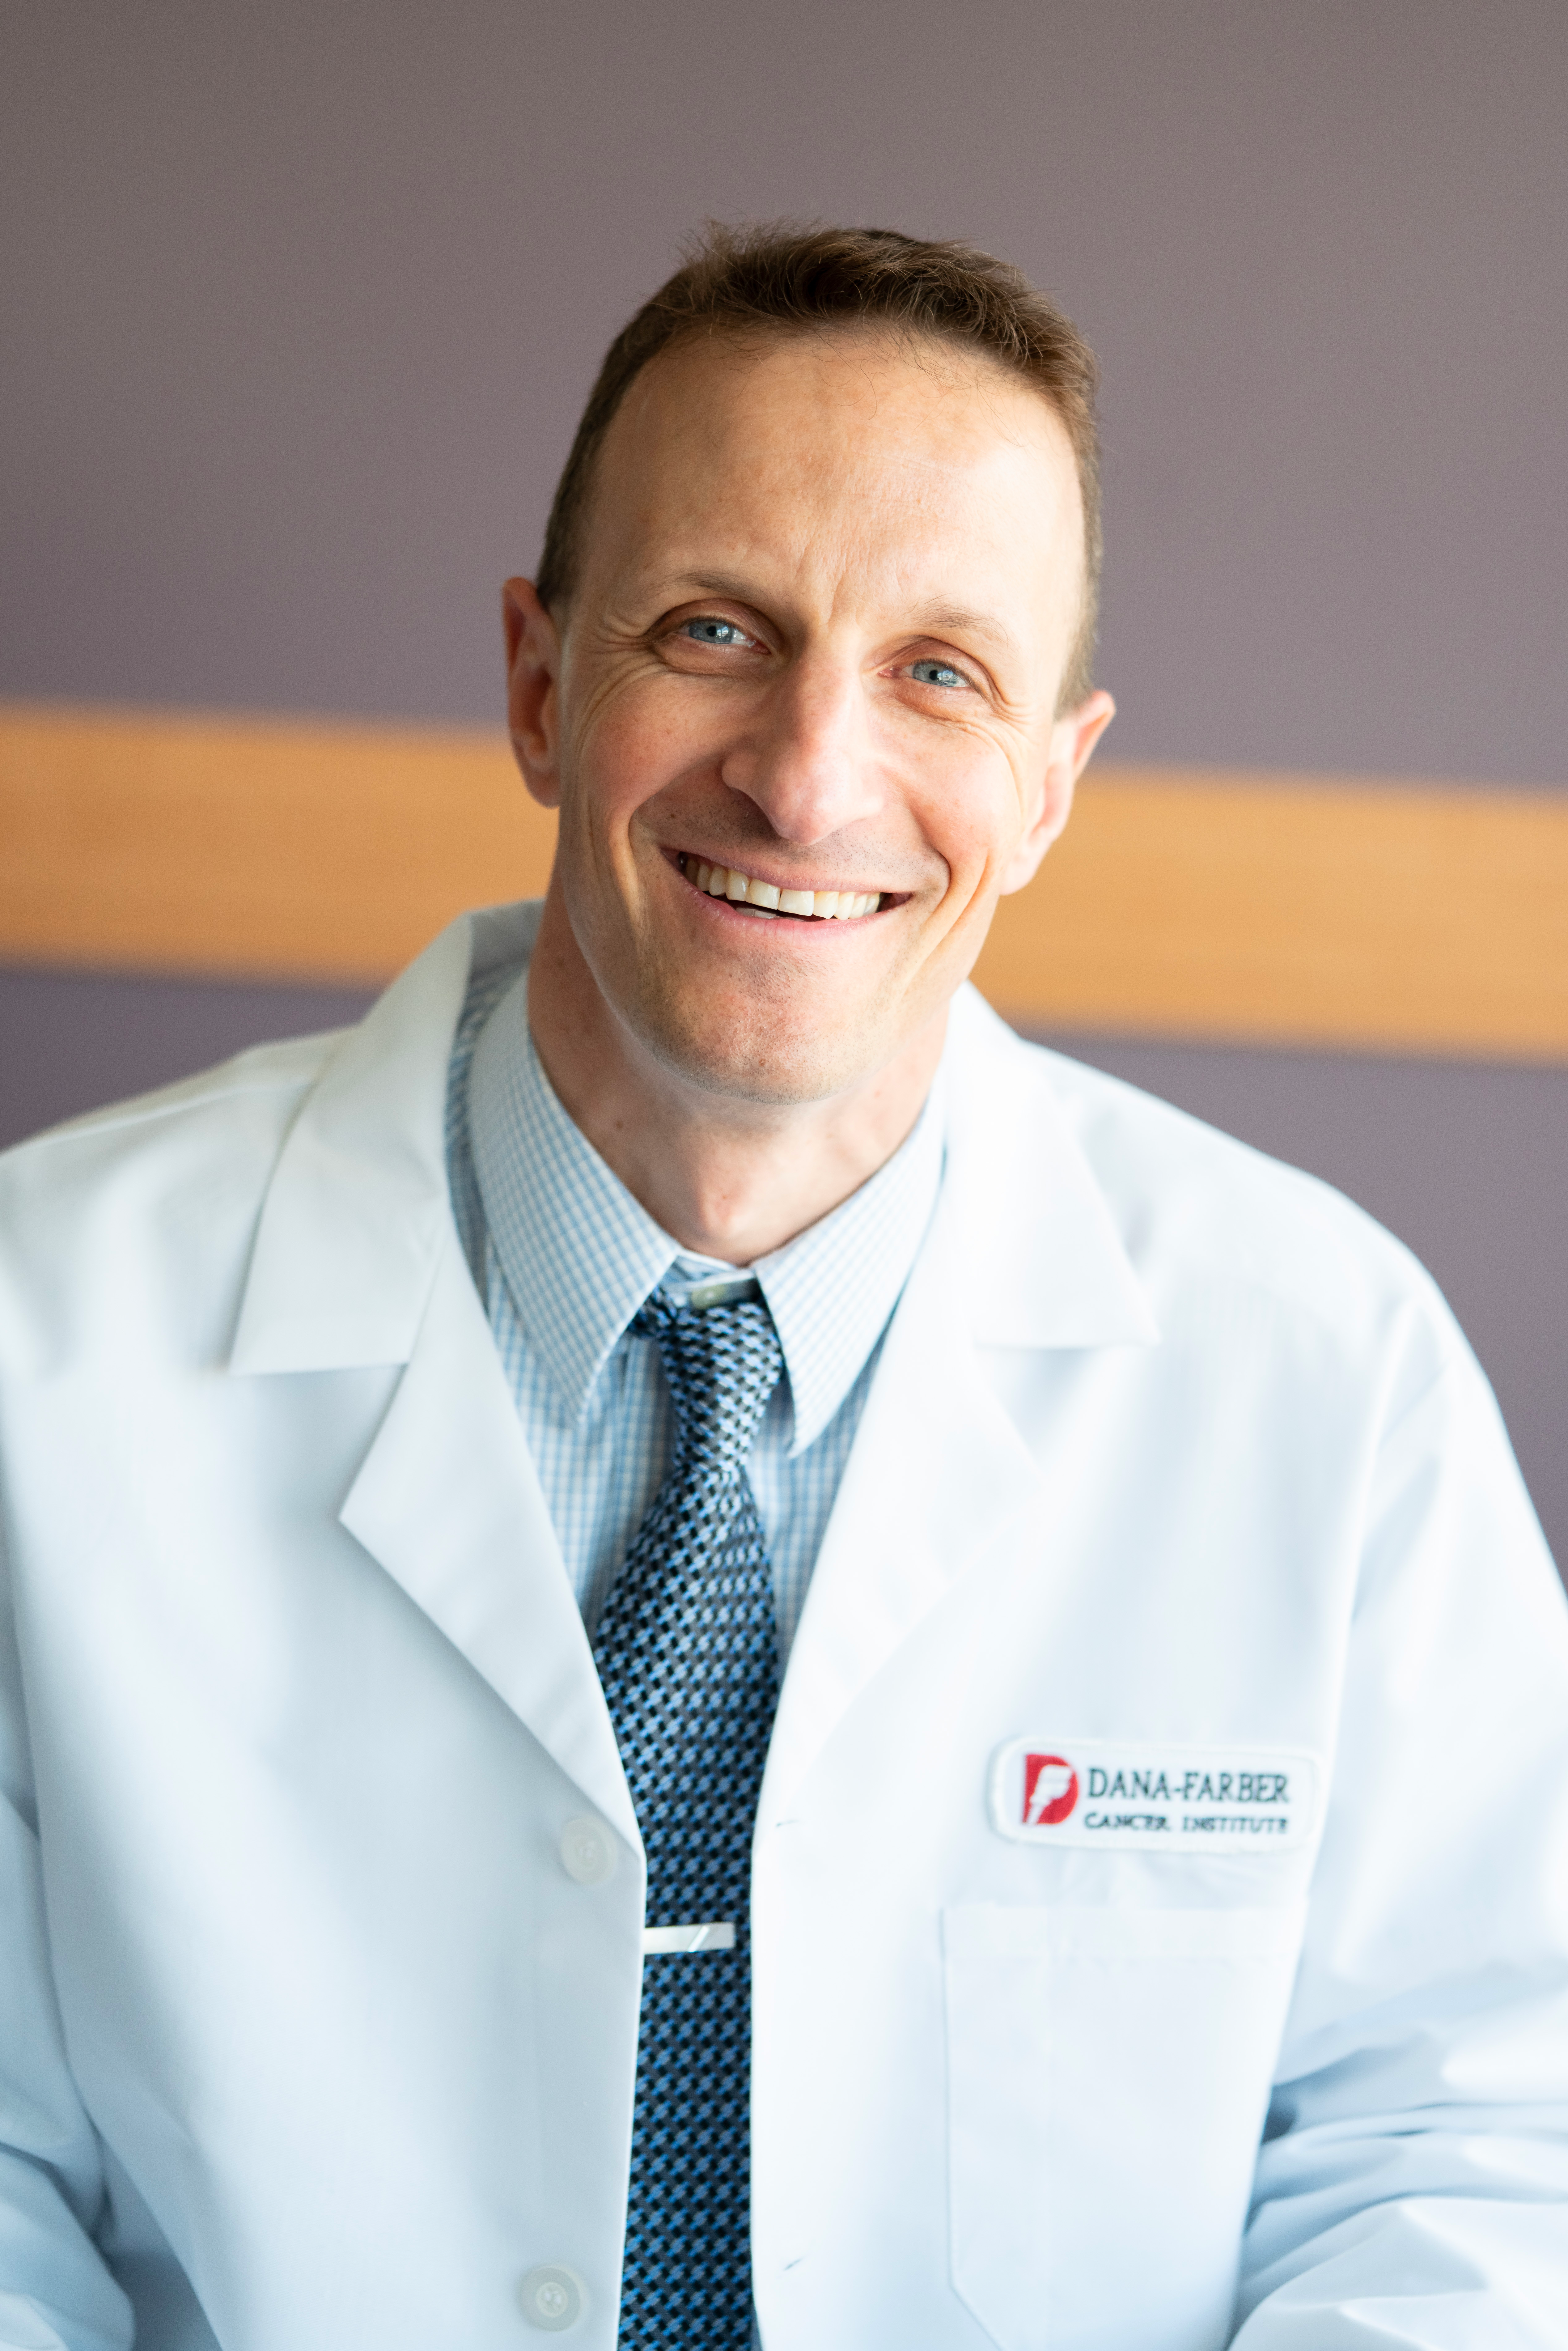 Philippe Armand, MD, PhD

Chief of Division of Lymphoma

Senior Physician

Associate Professor of Medicine

Dana-Farber Cancer Institute

Boston, Massachusetts